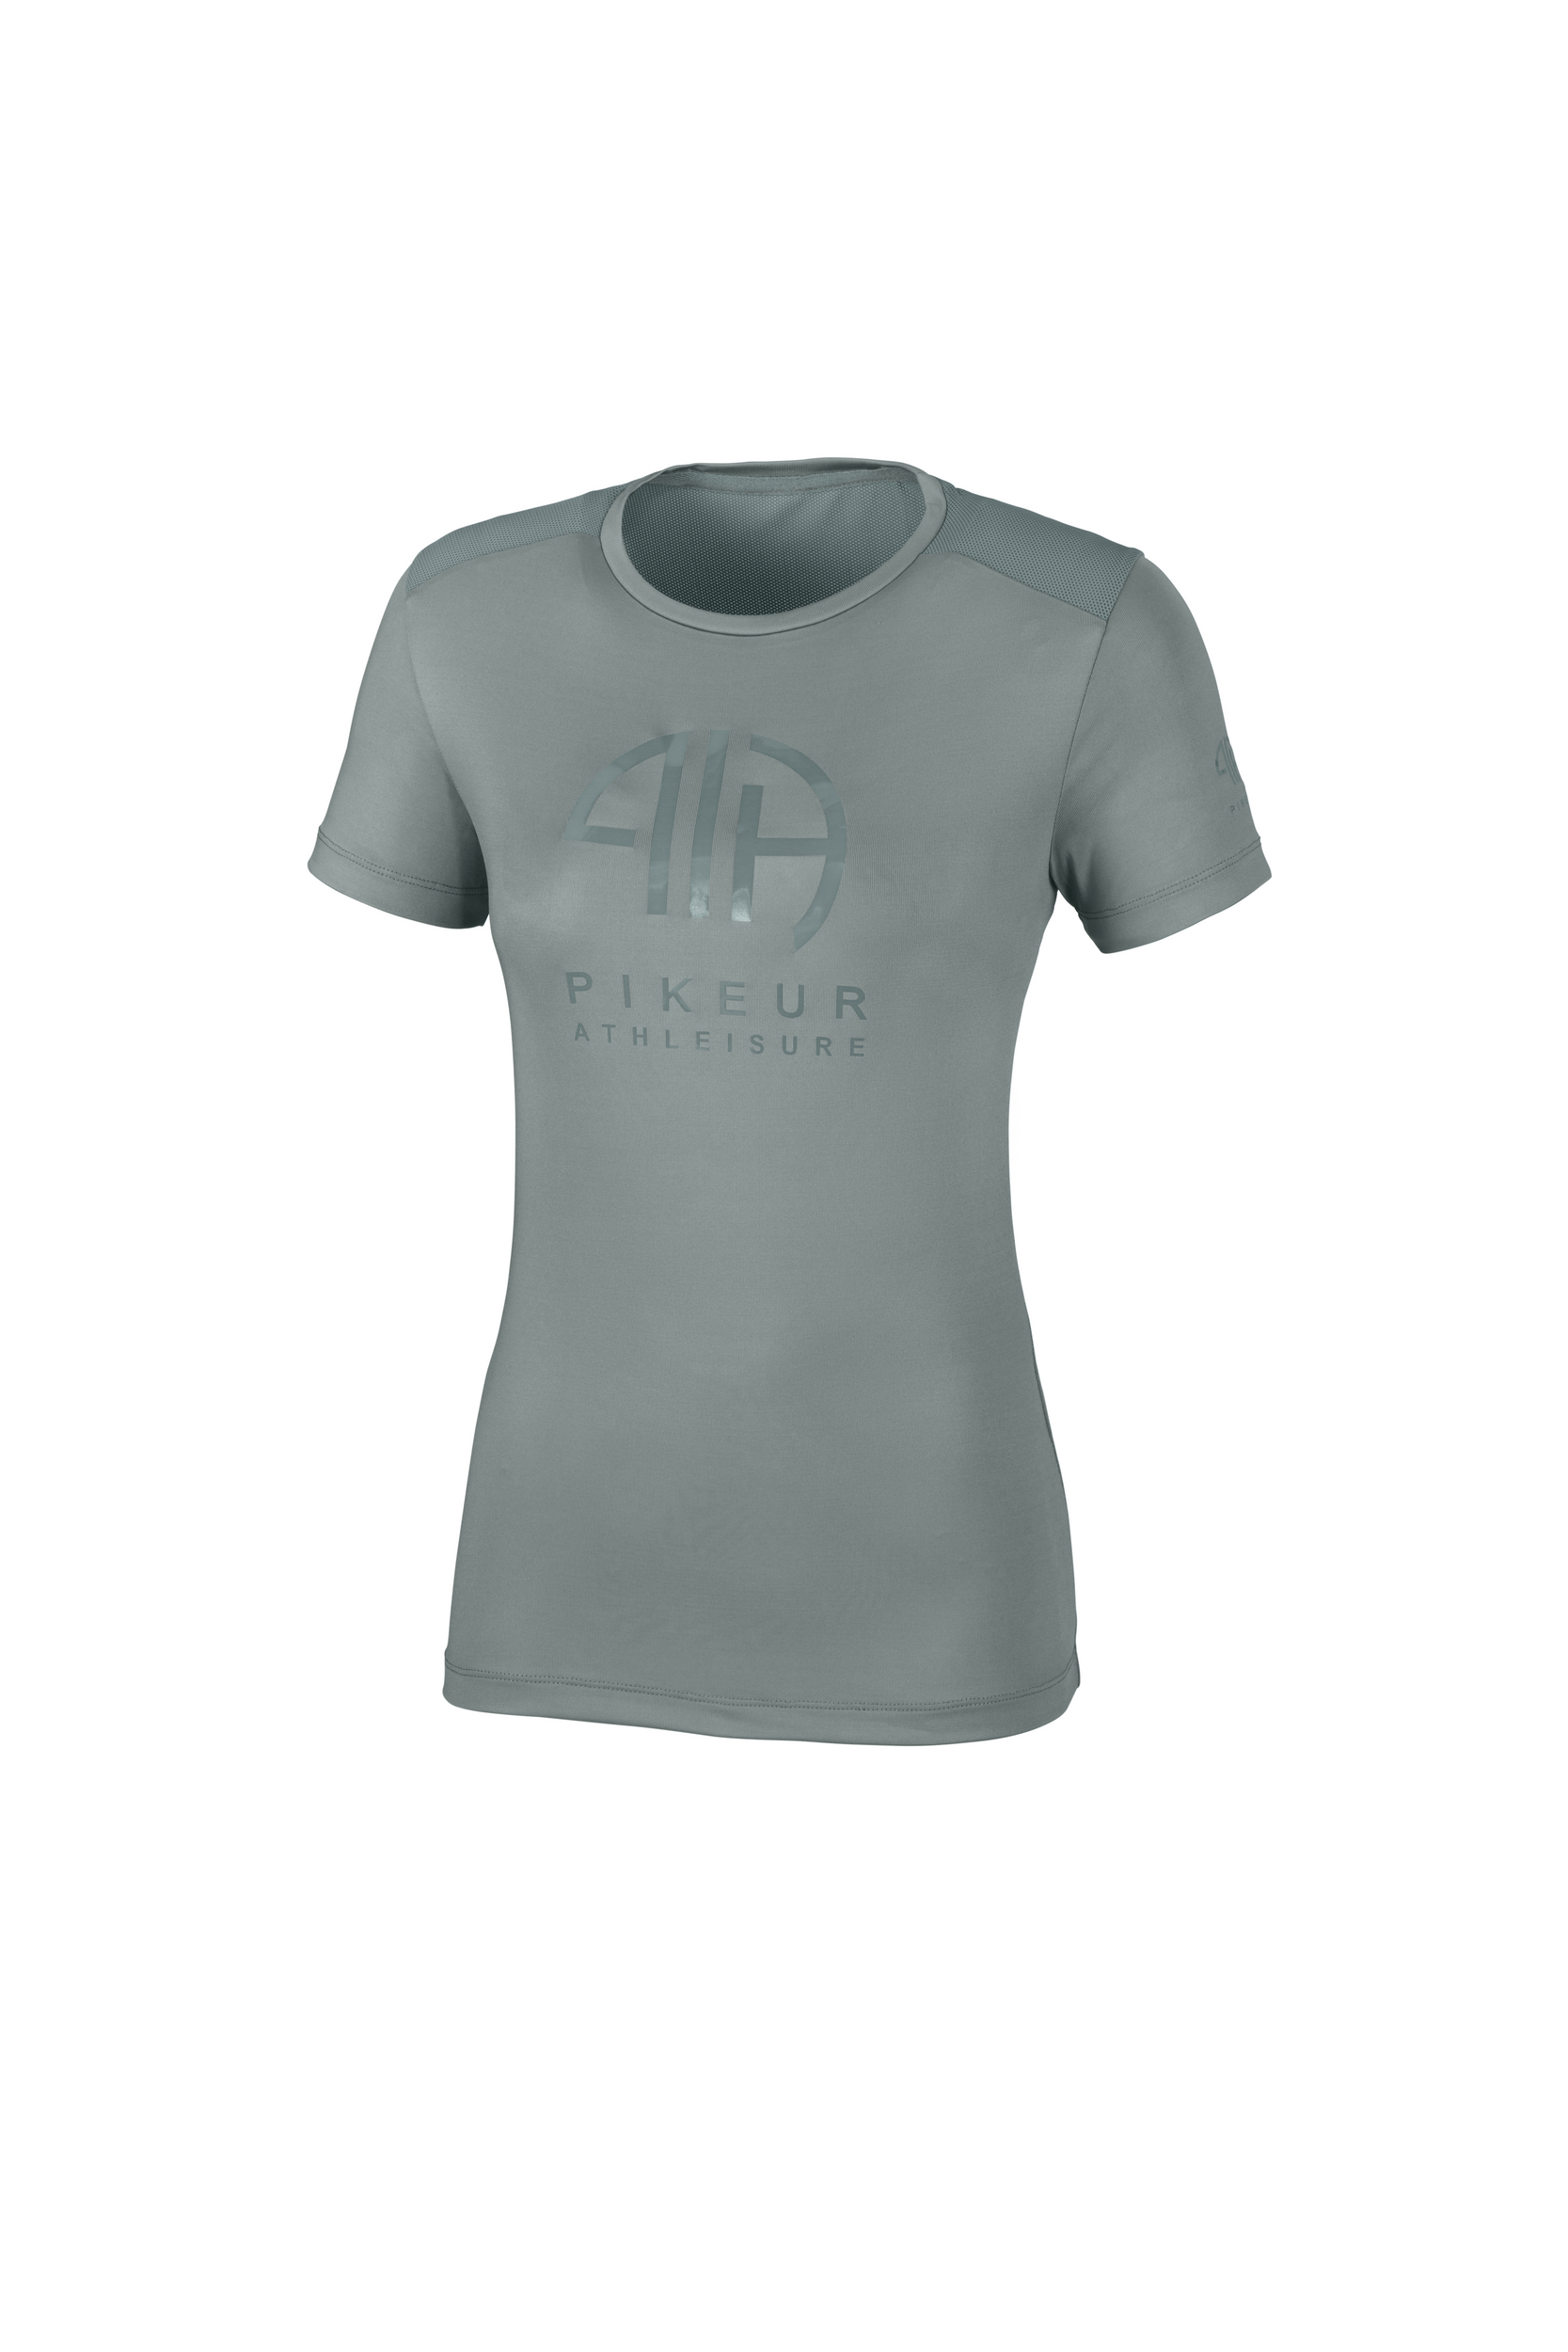 Pikeur Damen Funktions T-Shirt Athleisure FS24